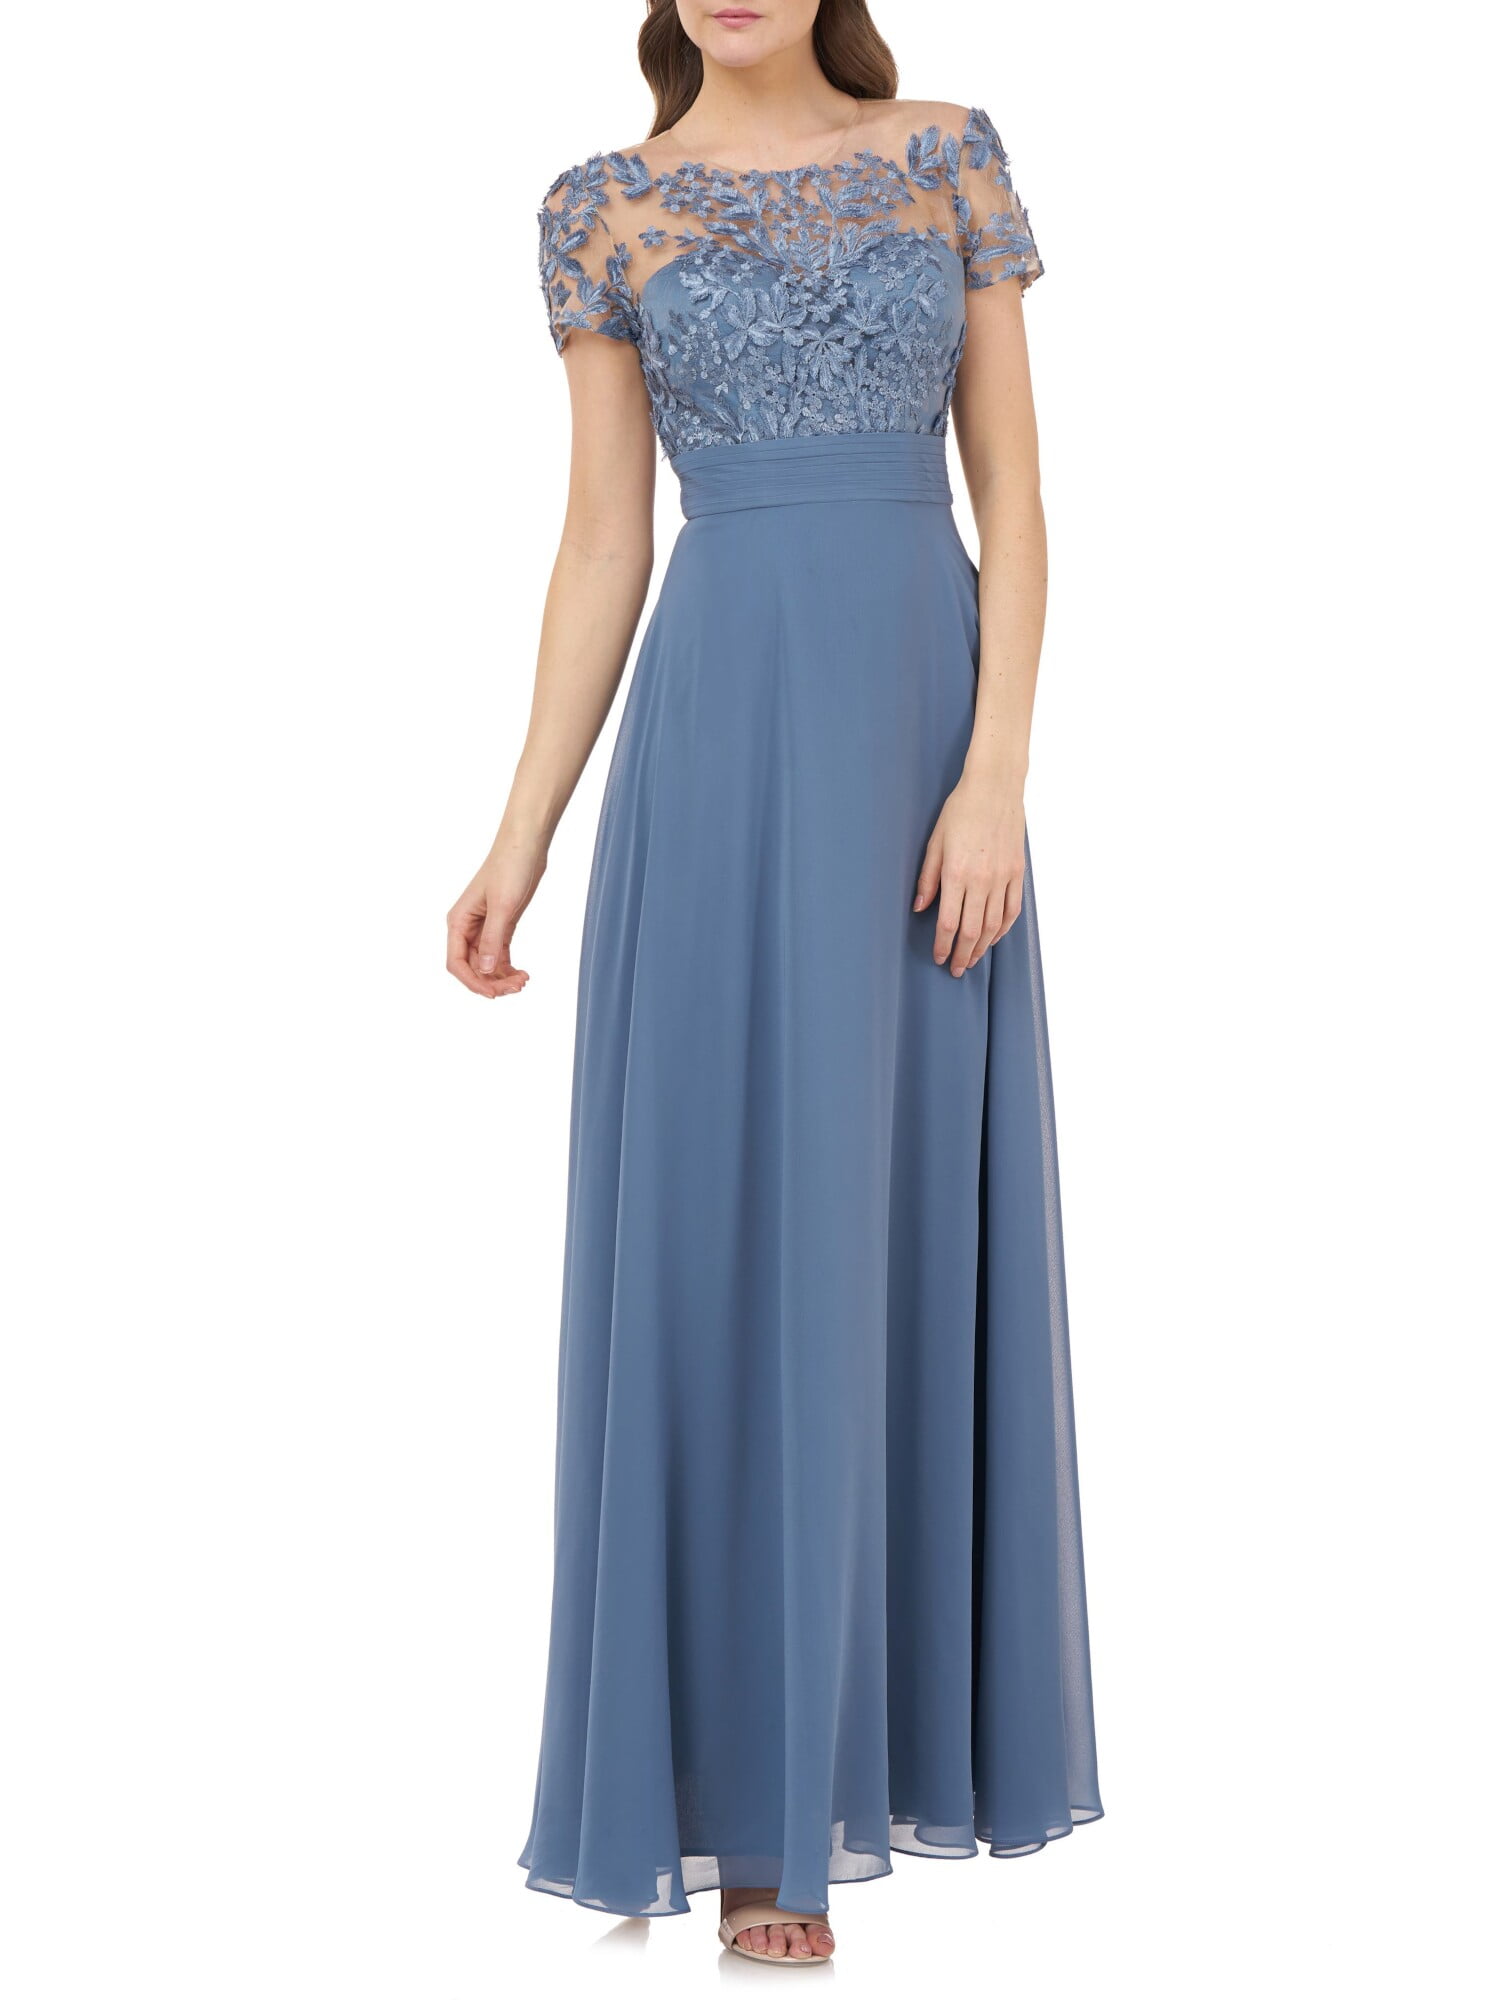 Oscar Daniel's Wedding Dress & Family Gown by Oscar Daniel | Bridestory.com